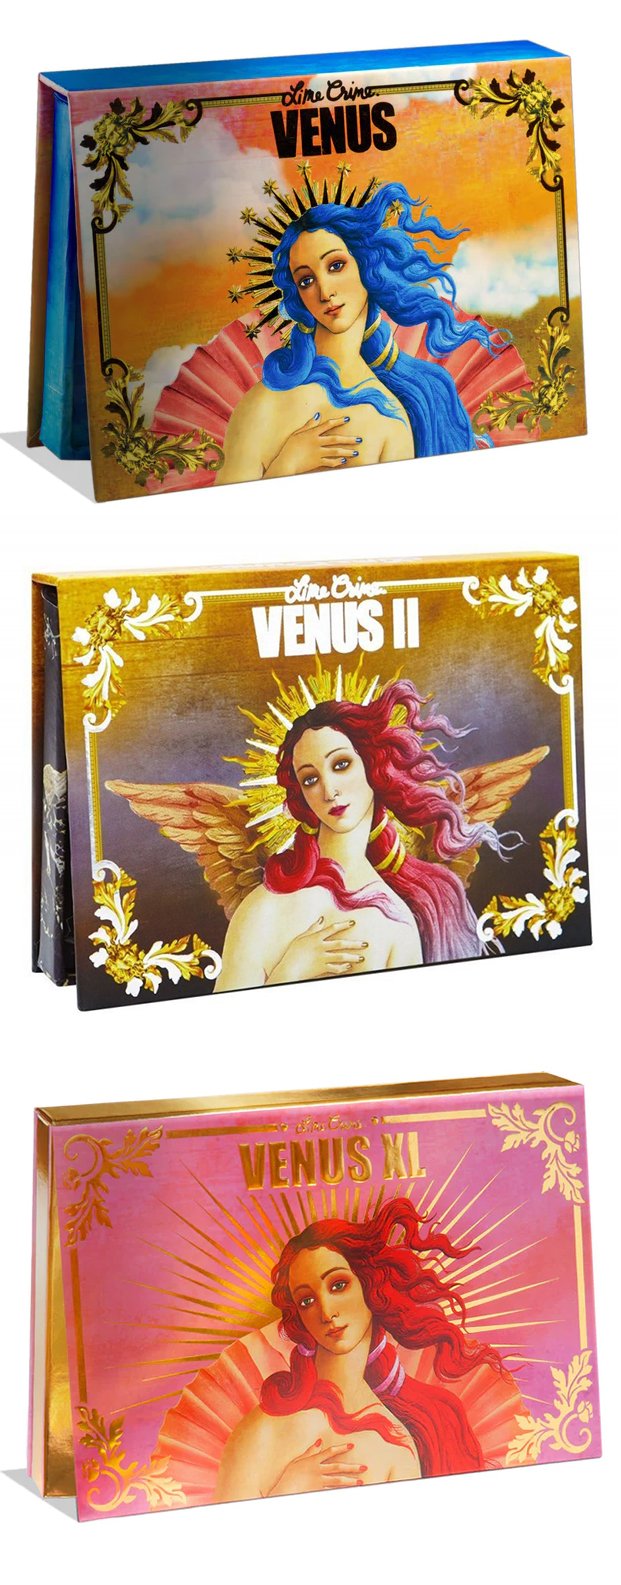   Venus, Venus II and Venus XL Eyeshadow Palettes Lime Crime, 2015 and 2018   